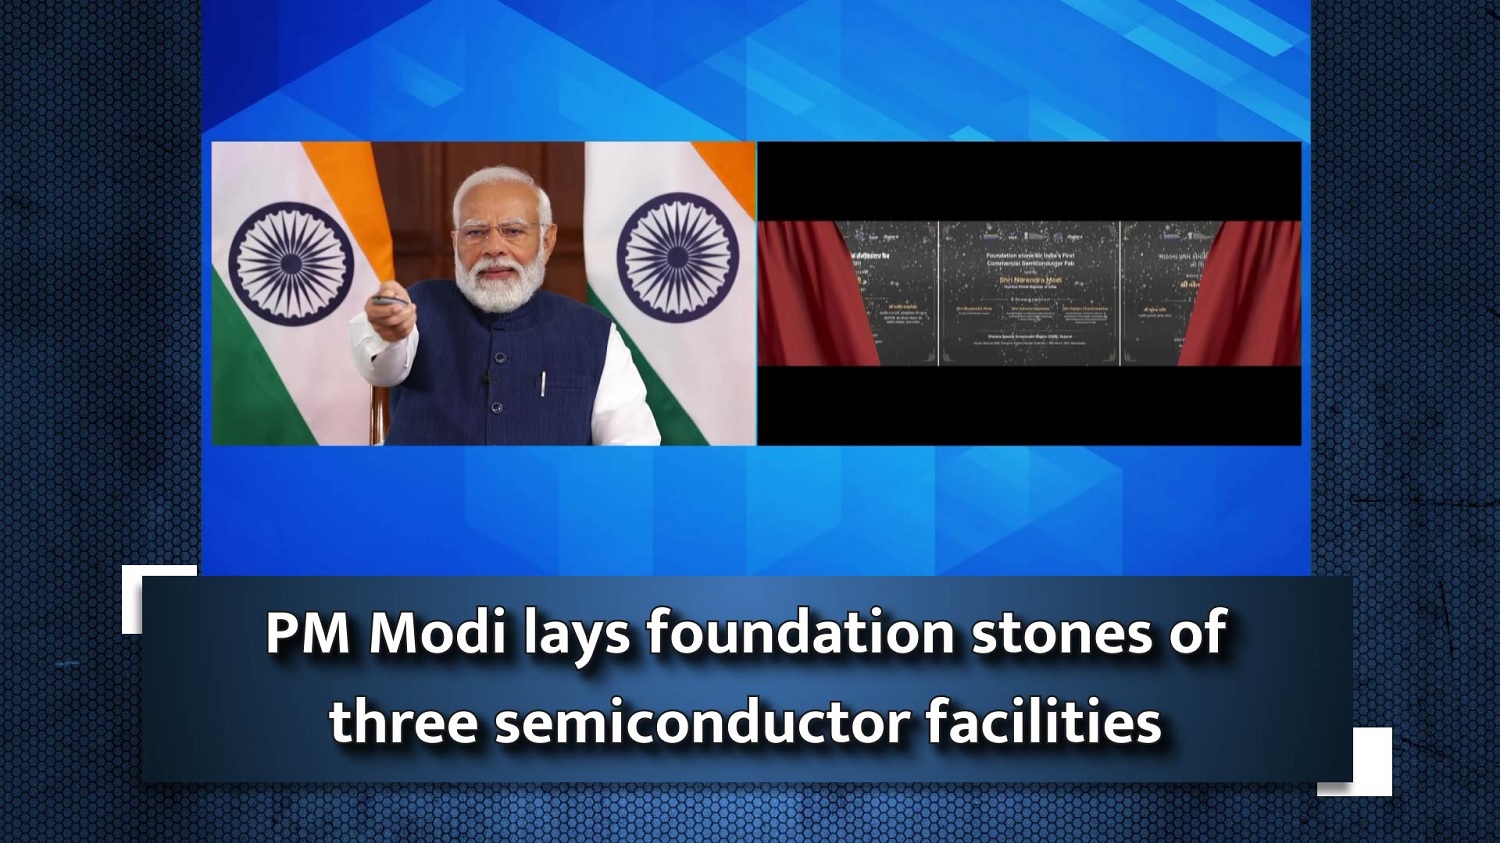 Prime Minister Narendra Modi  lays foundation stones of three semiconductor facilities